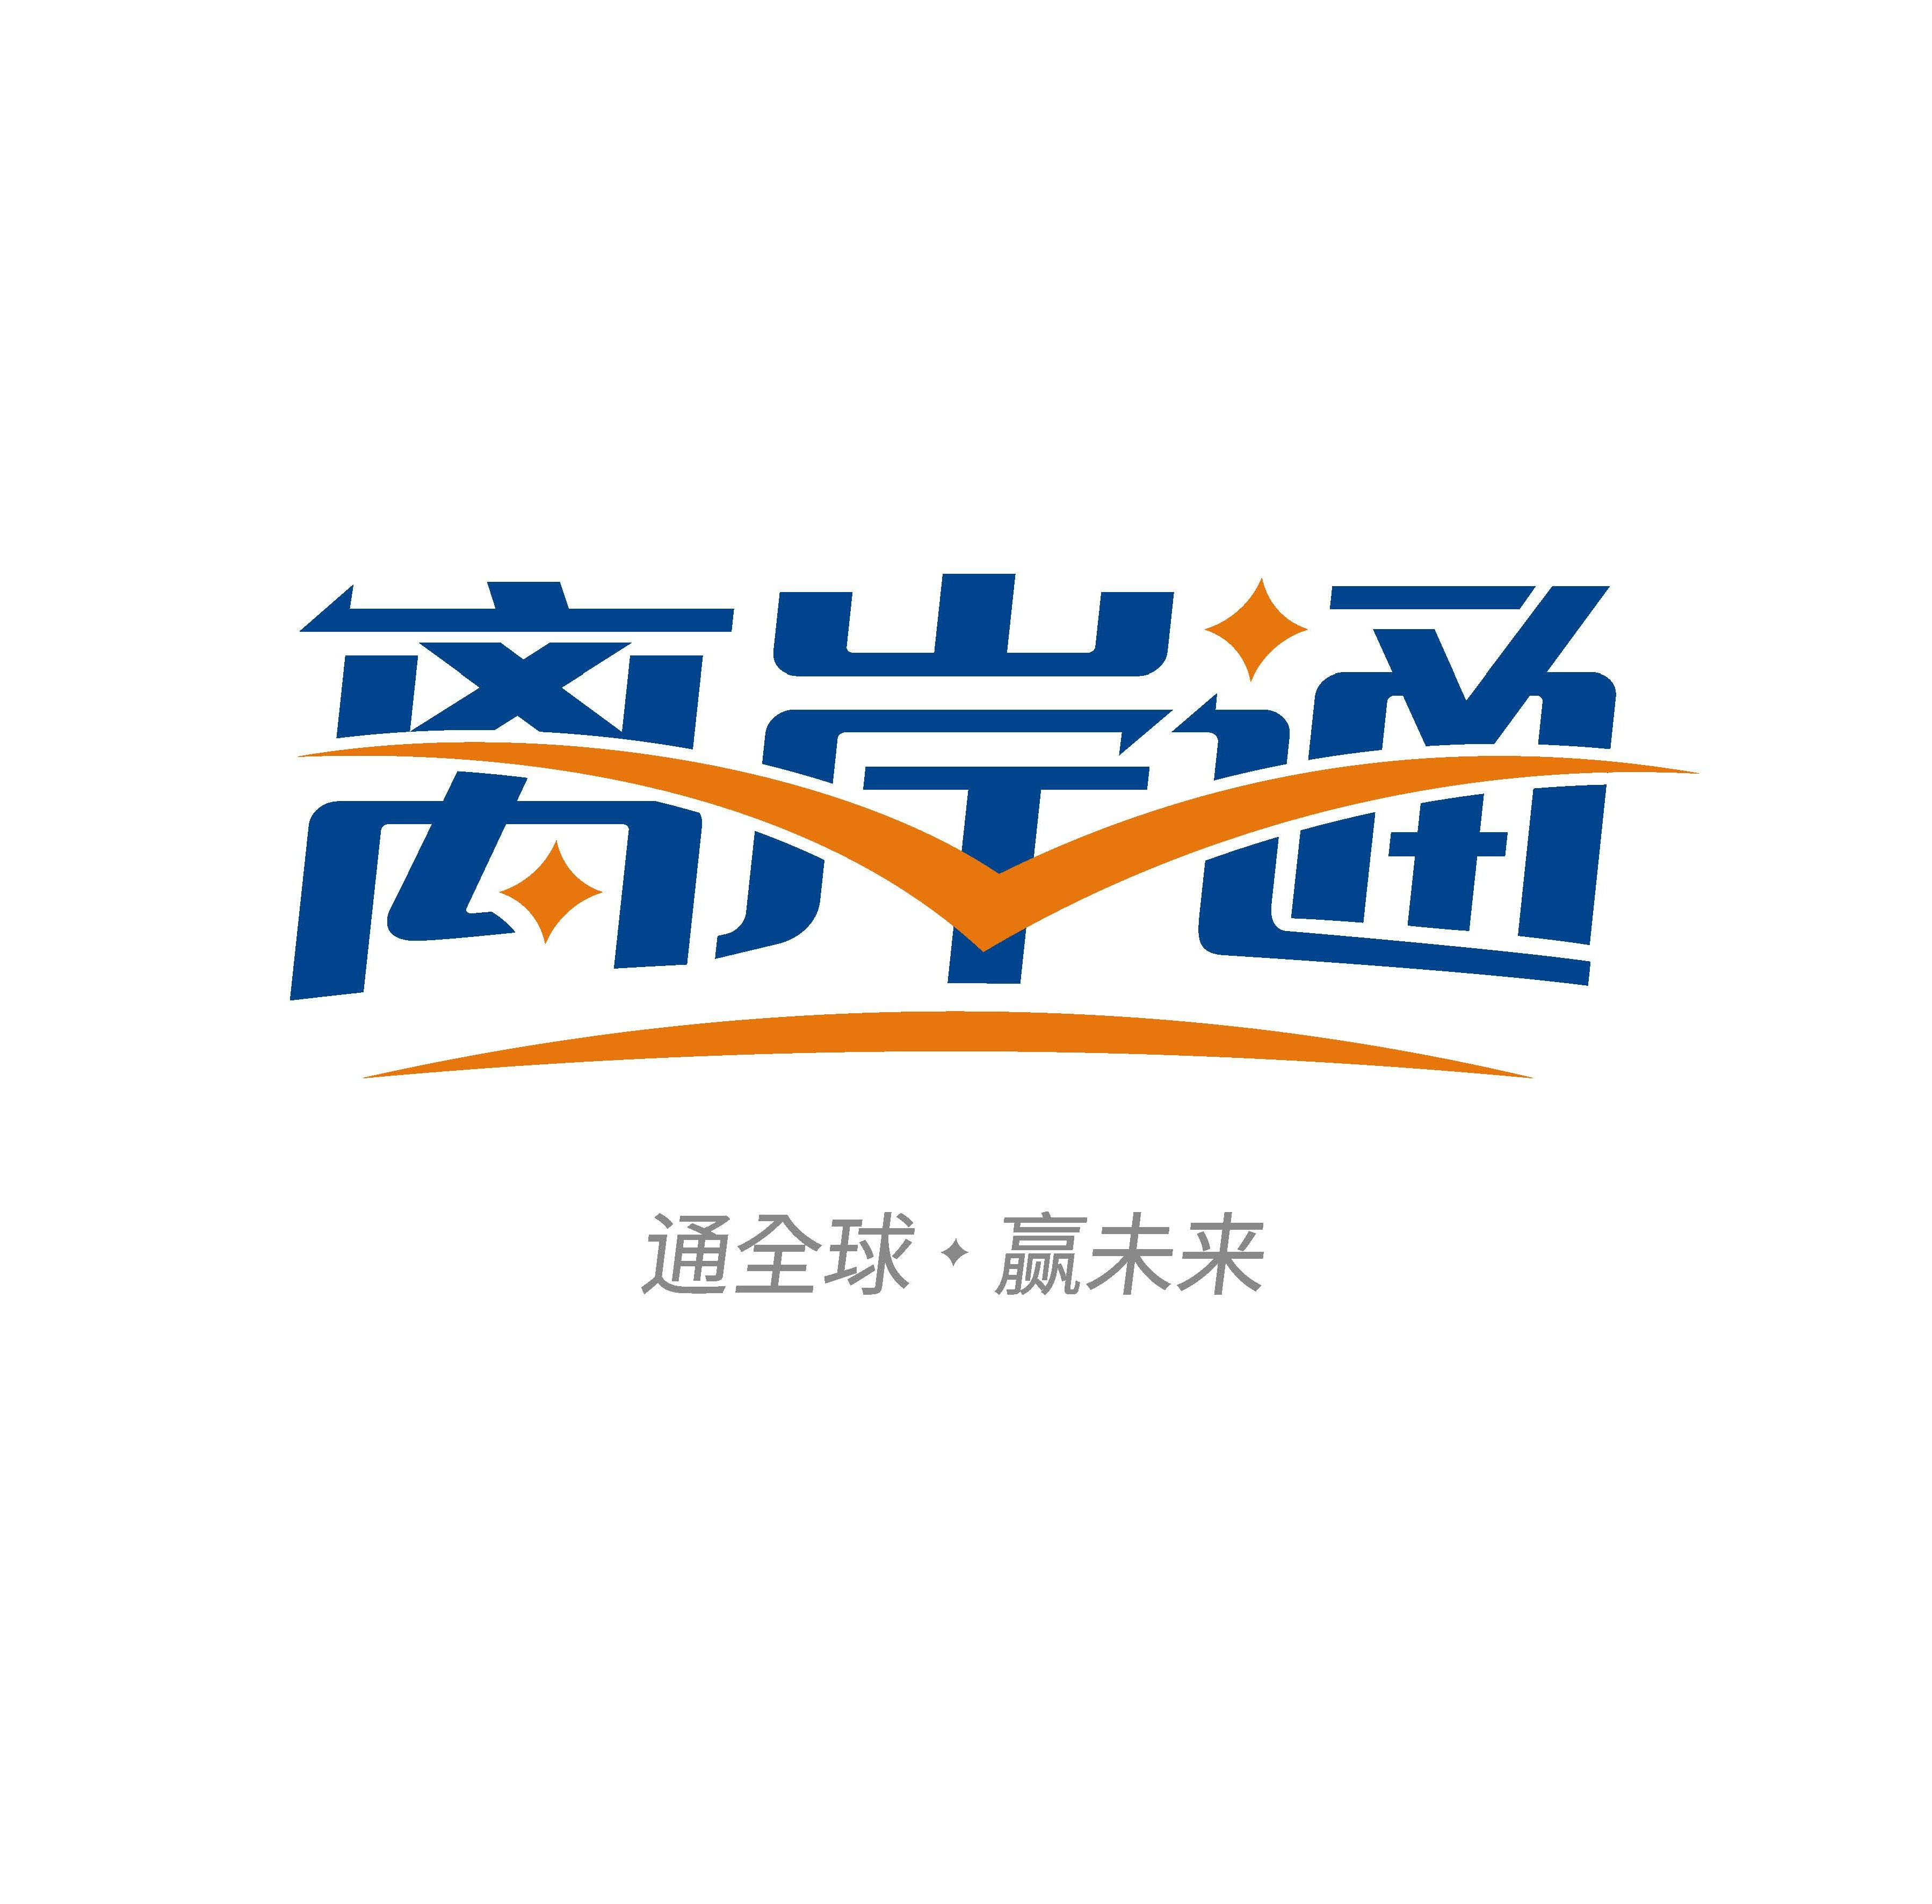 Shanghai Pilot Free Trade Zone “TradeNexus” turns to SITA and CHAMP Cargosystems to track shipments